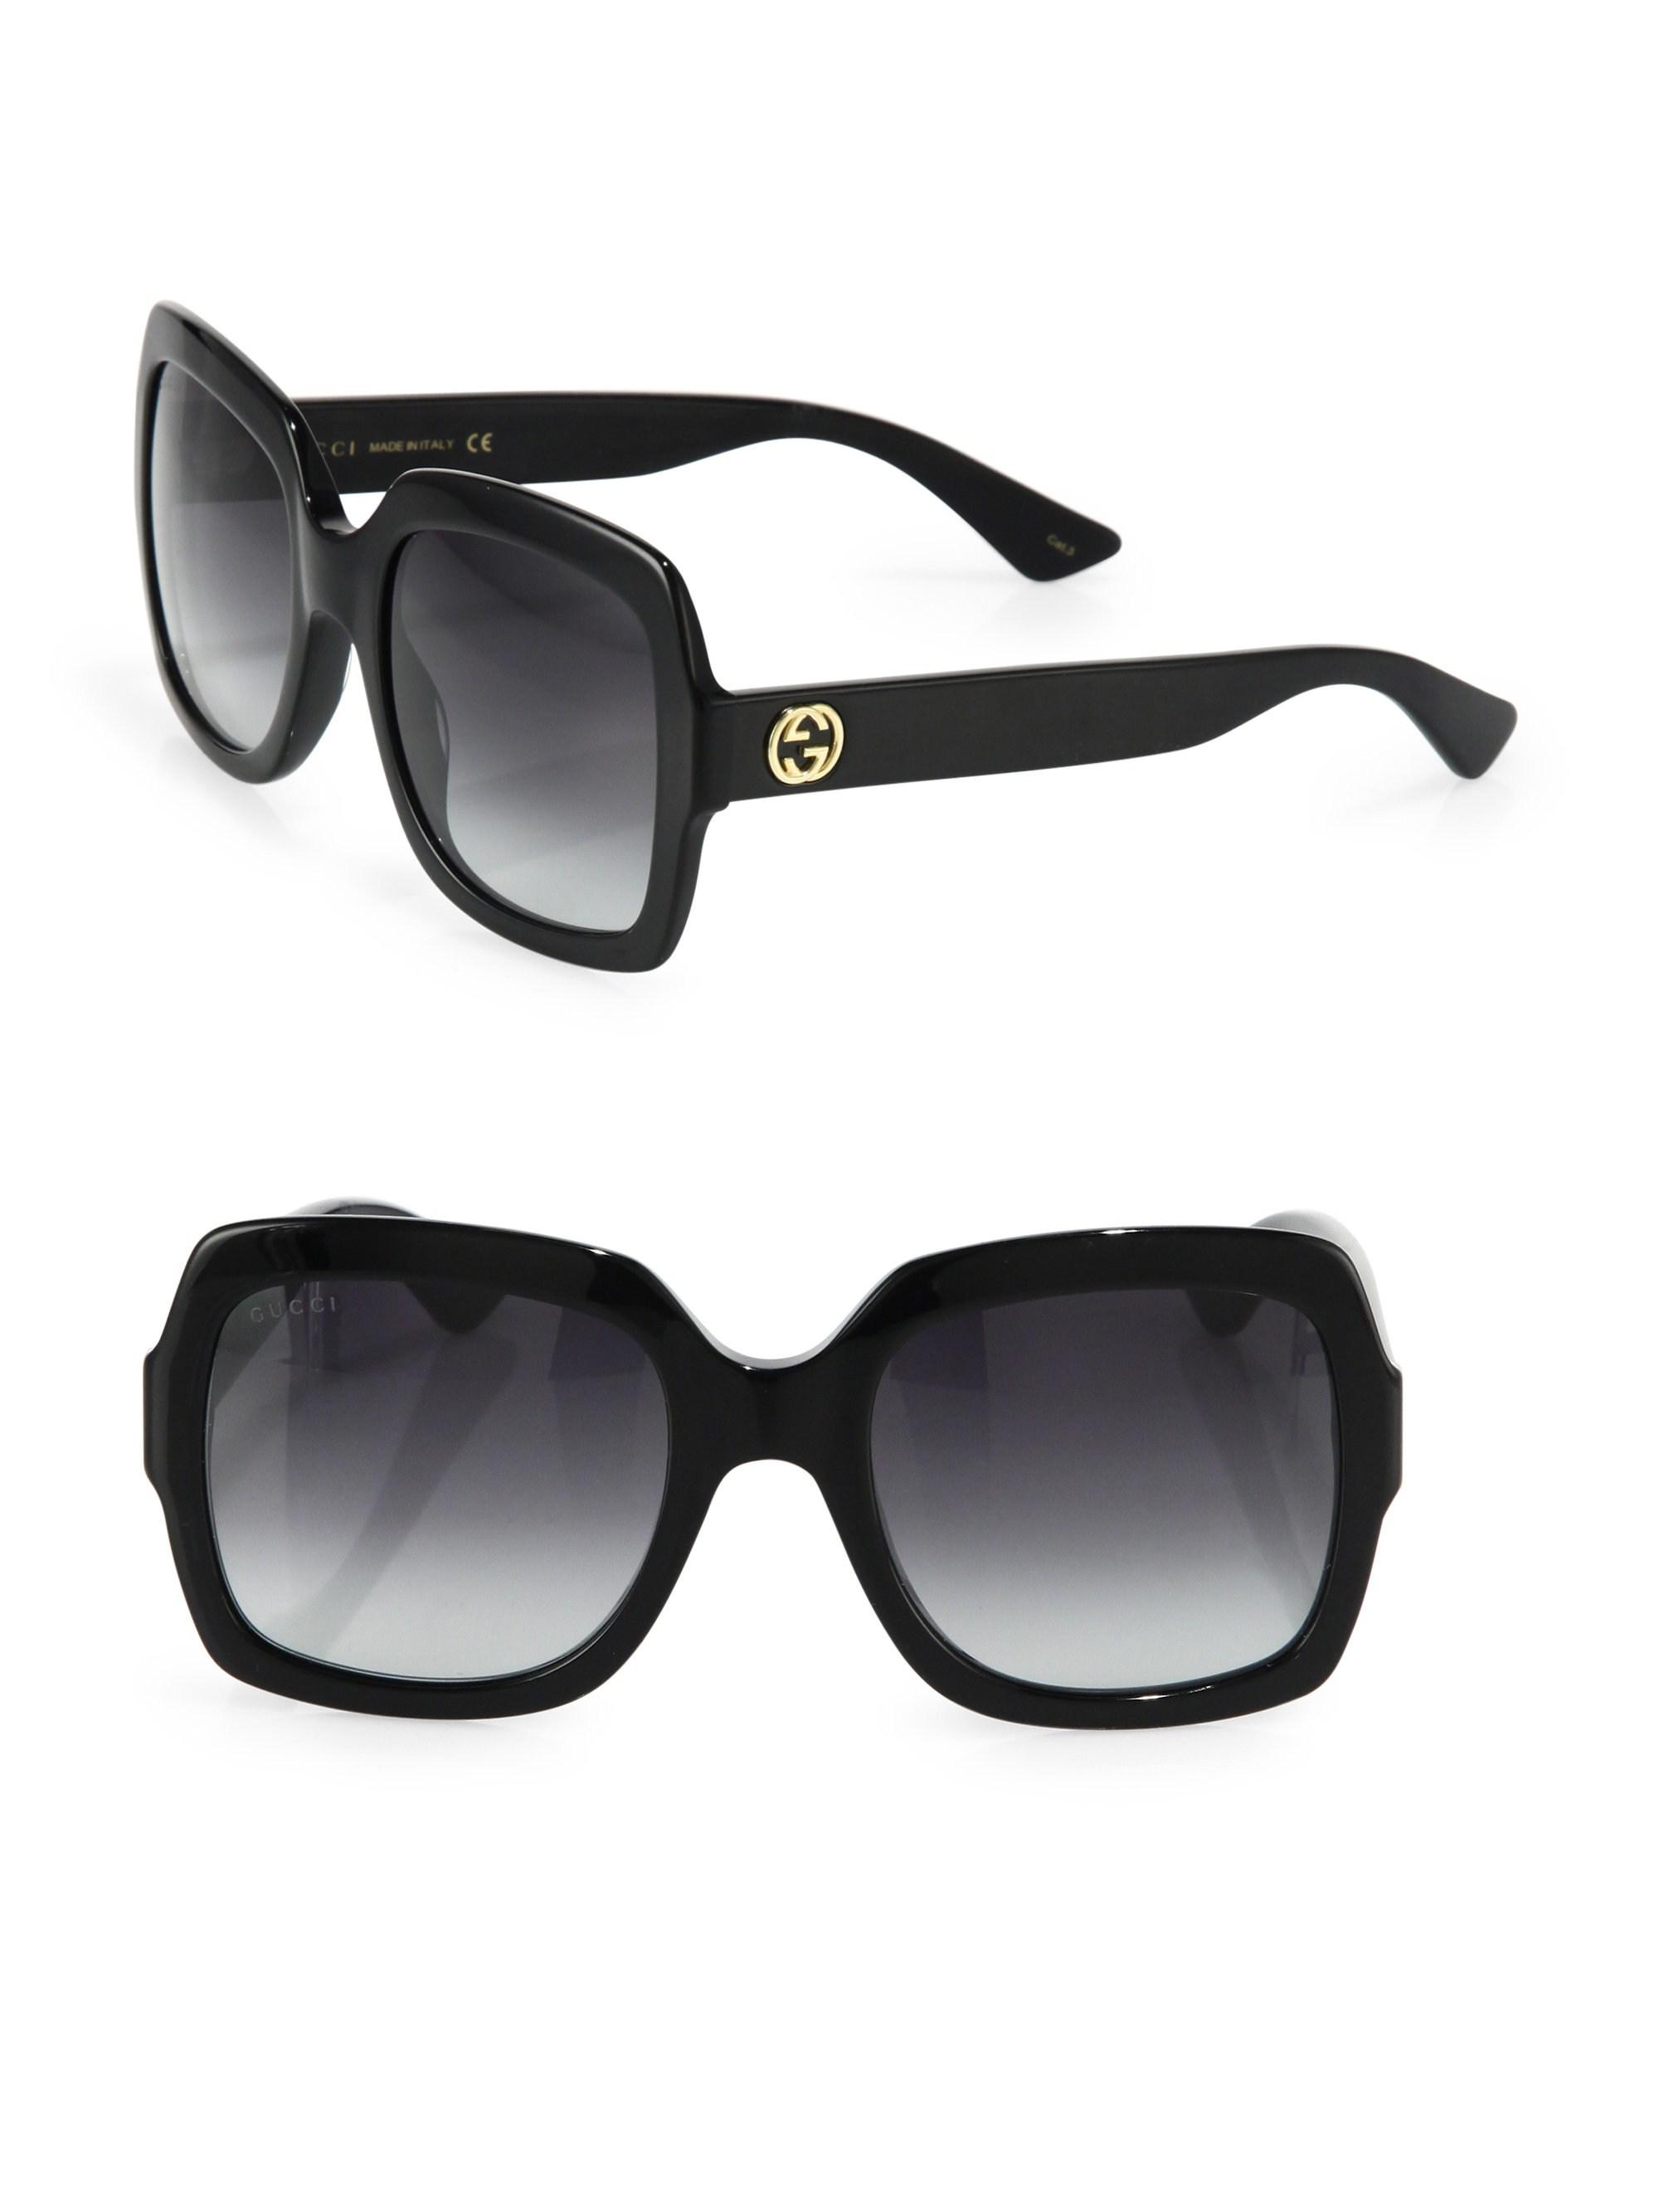 Lyst - Gucci 54mm Oversized Square Sunglasses in Black